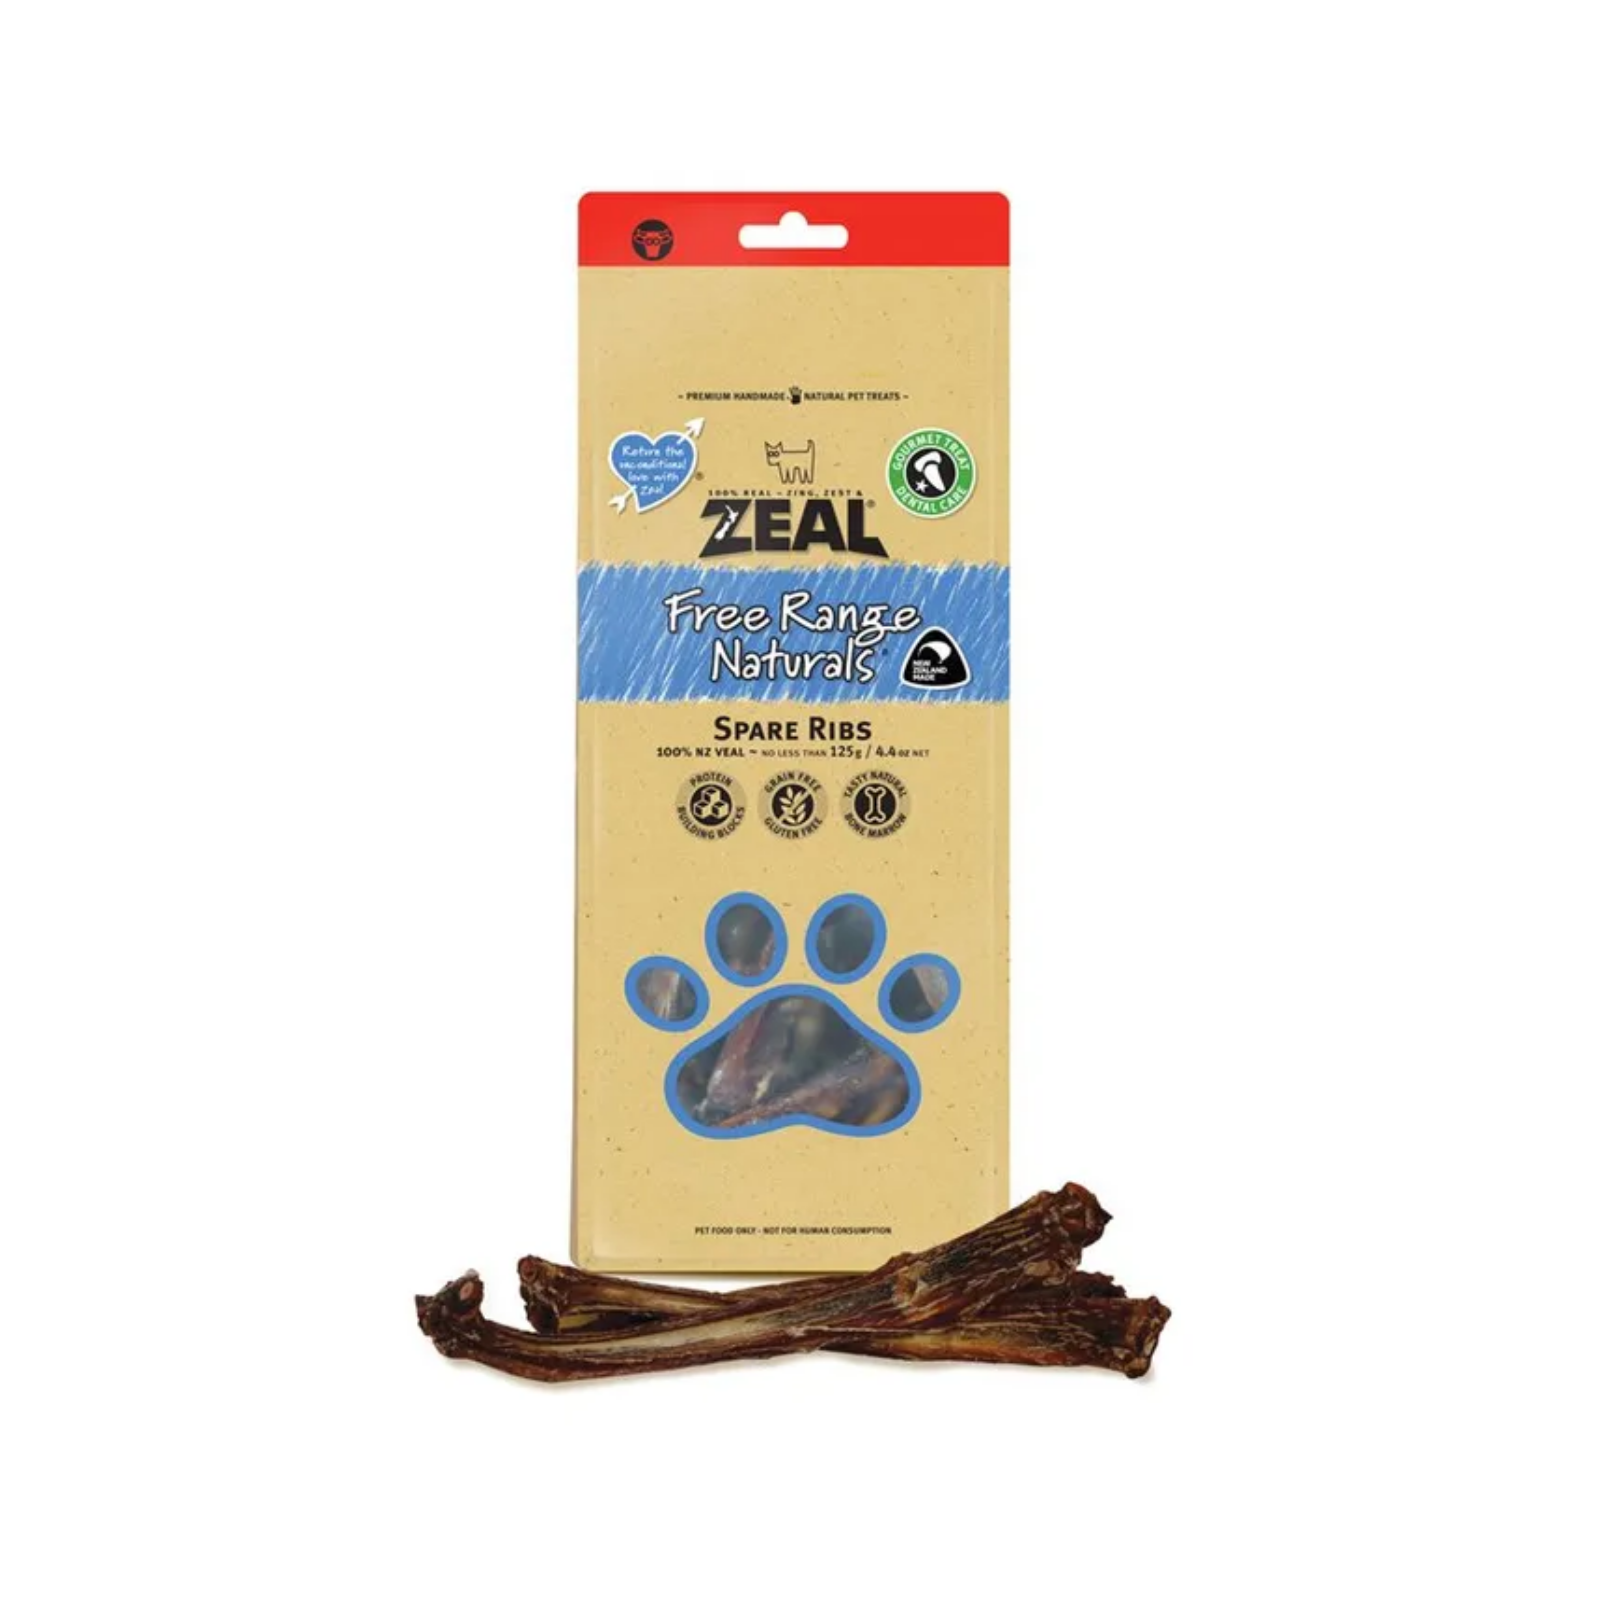 Zeal Dog Treats, Free Range Naturals Spare Ribs.